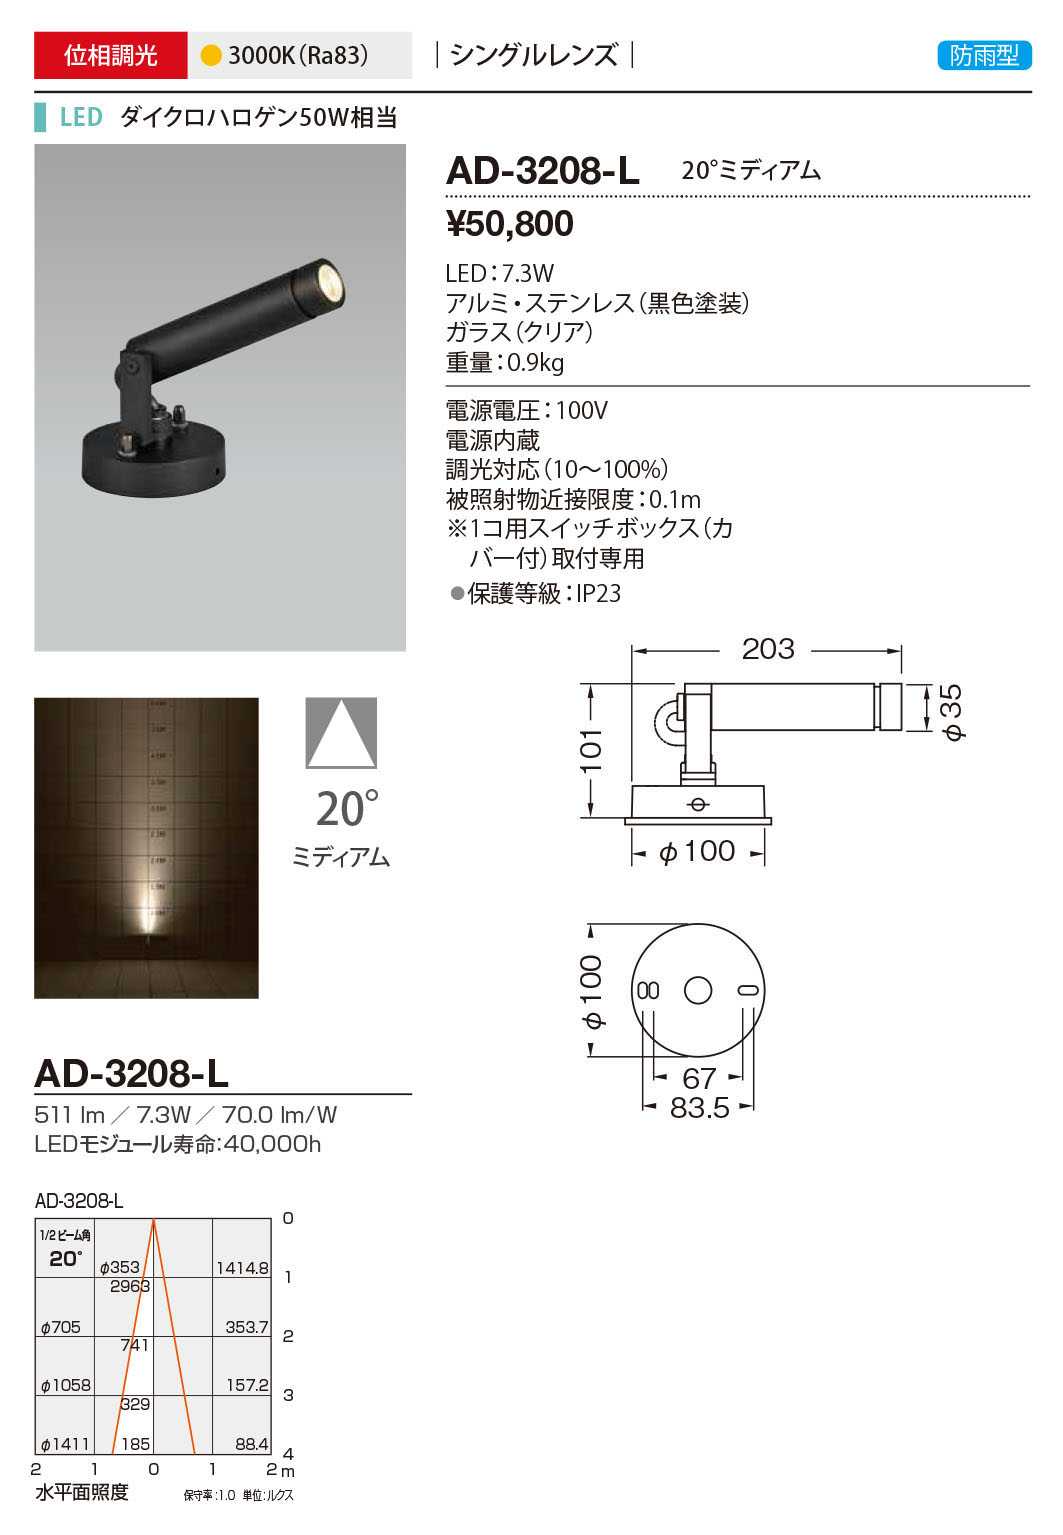 AD-3207-L 山田照明 屋外スポットライト 黒色 LED 電球色 調光 35度 通販